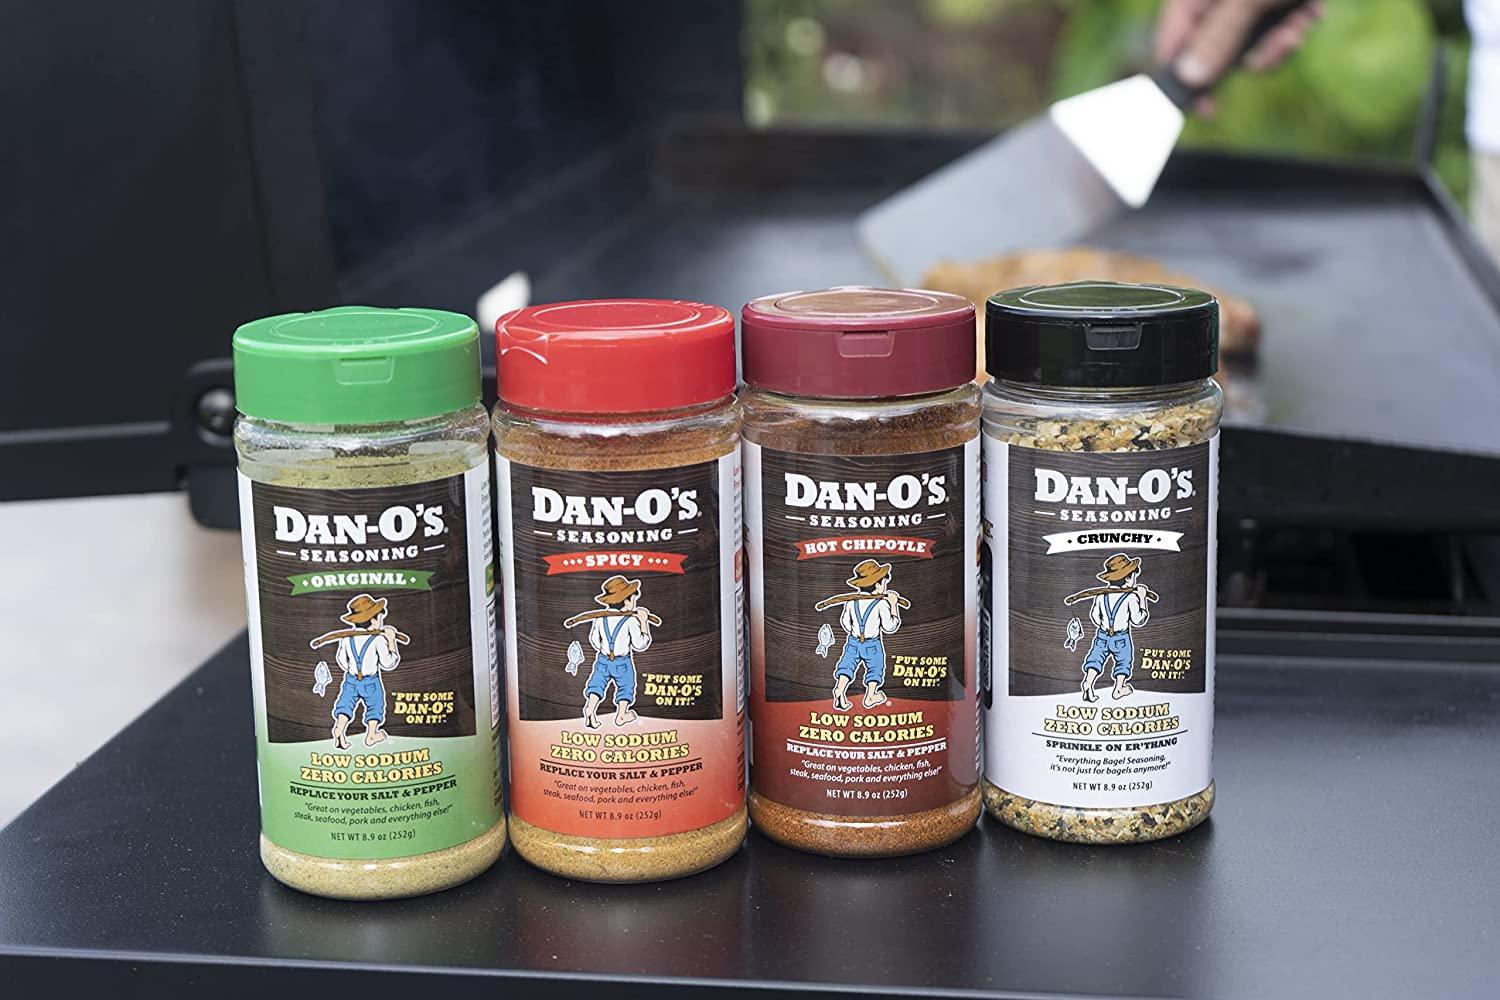  Dan-O's Seasoning Spicy, Small Bottle